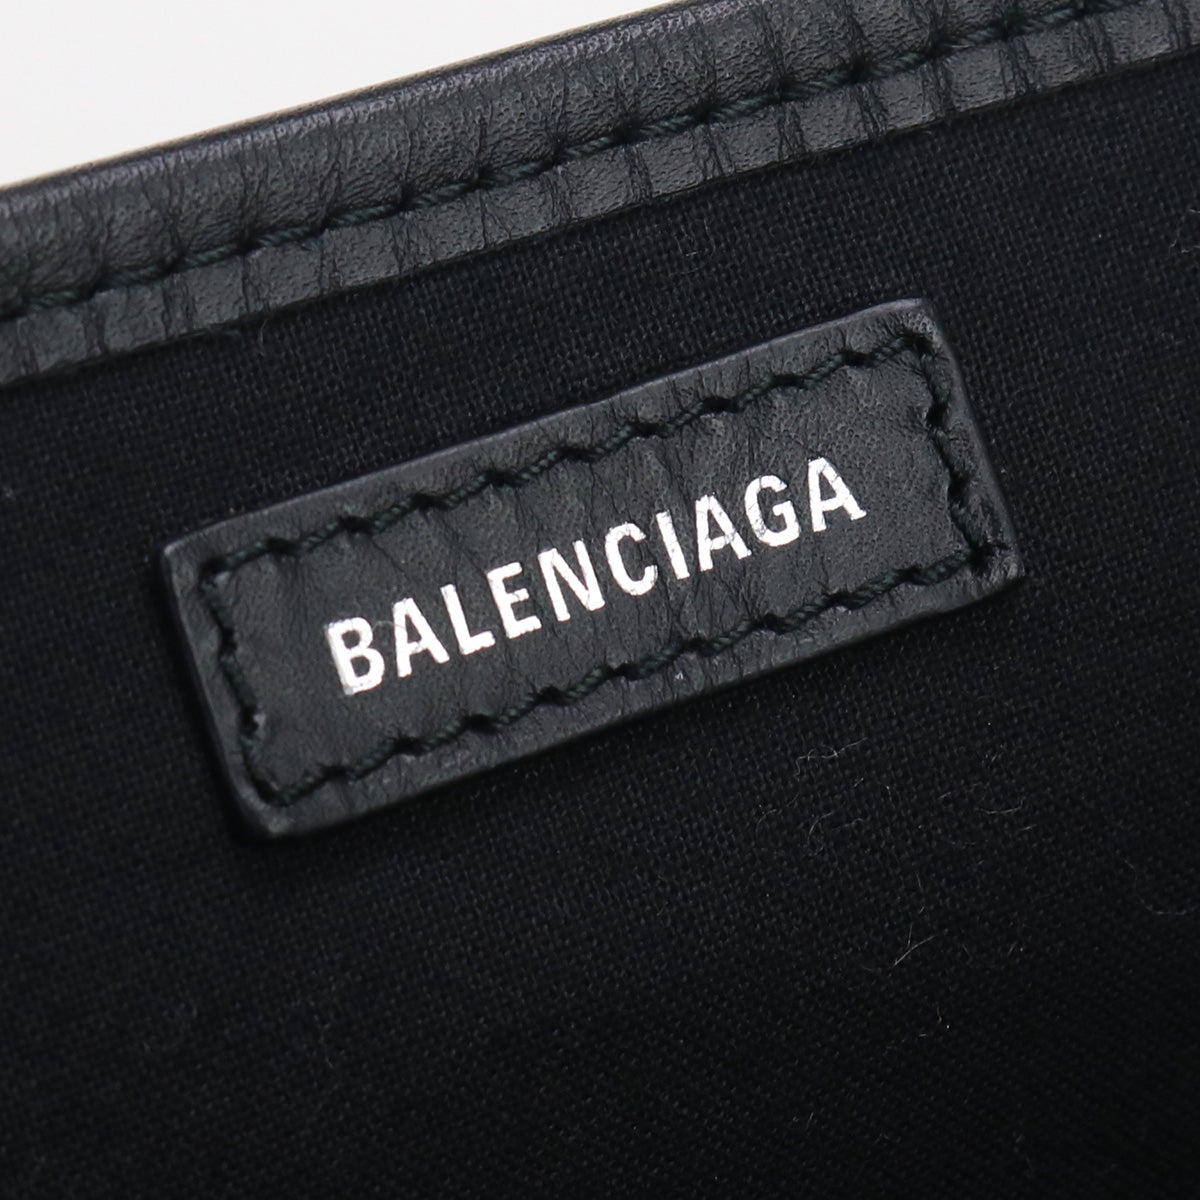 BALENCIAGA バレンシアガ ネイビーカバスS 339933 1081 ハンドバッグ キャンバス【中古】 レディース